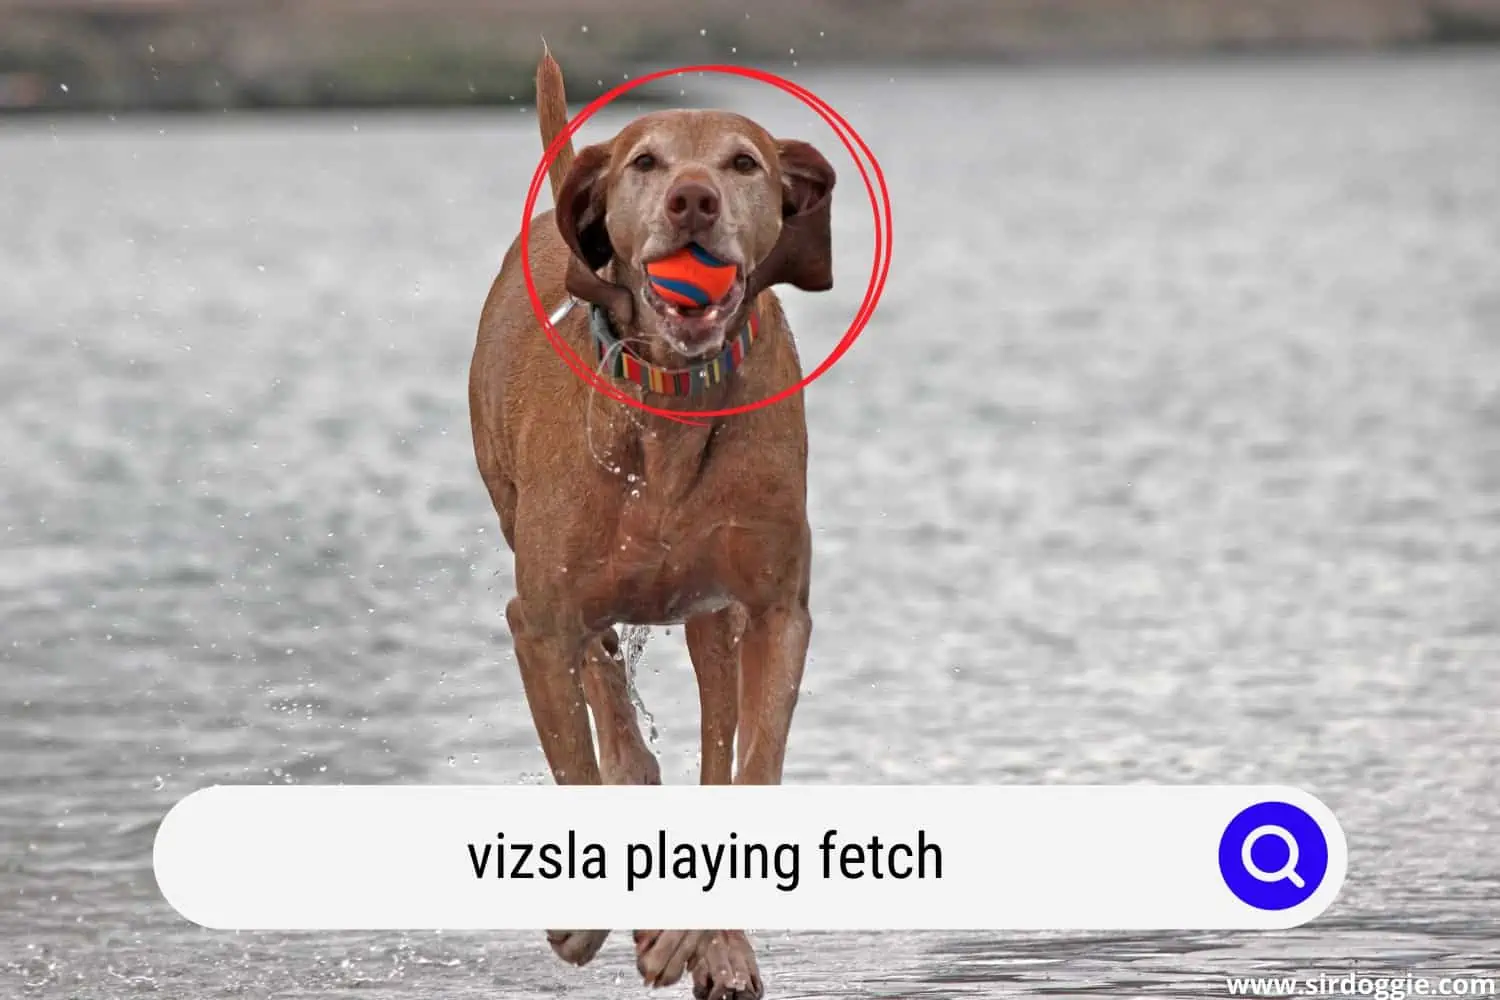 A Vizsla dog fetching a ball